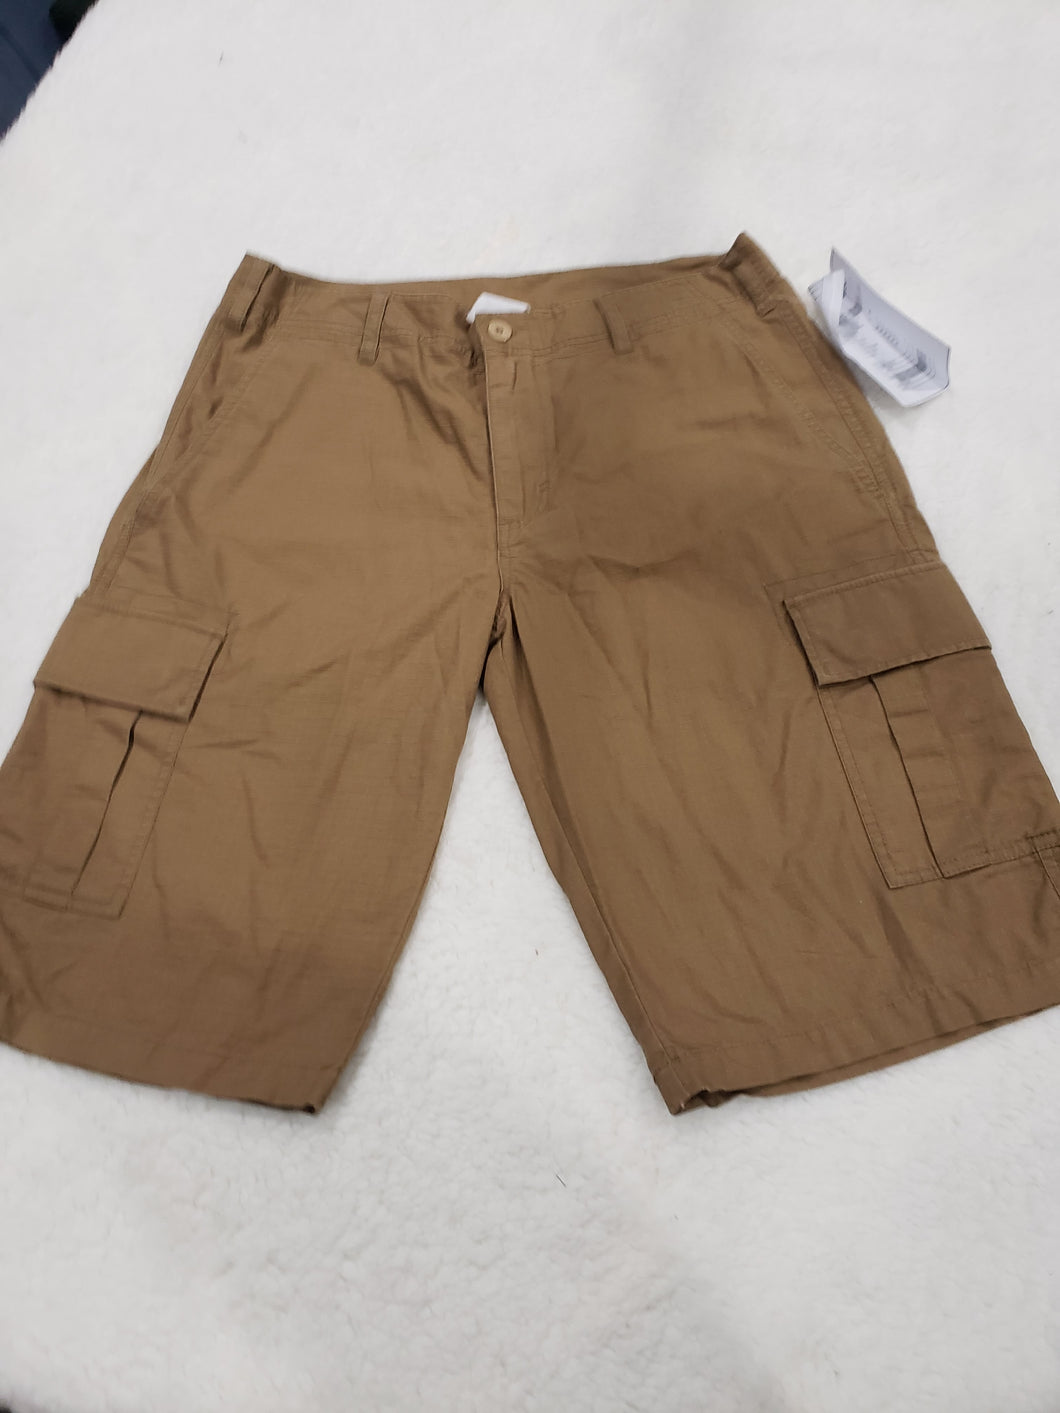 H&M Cargo boys shorts size 32